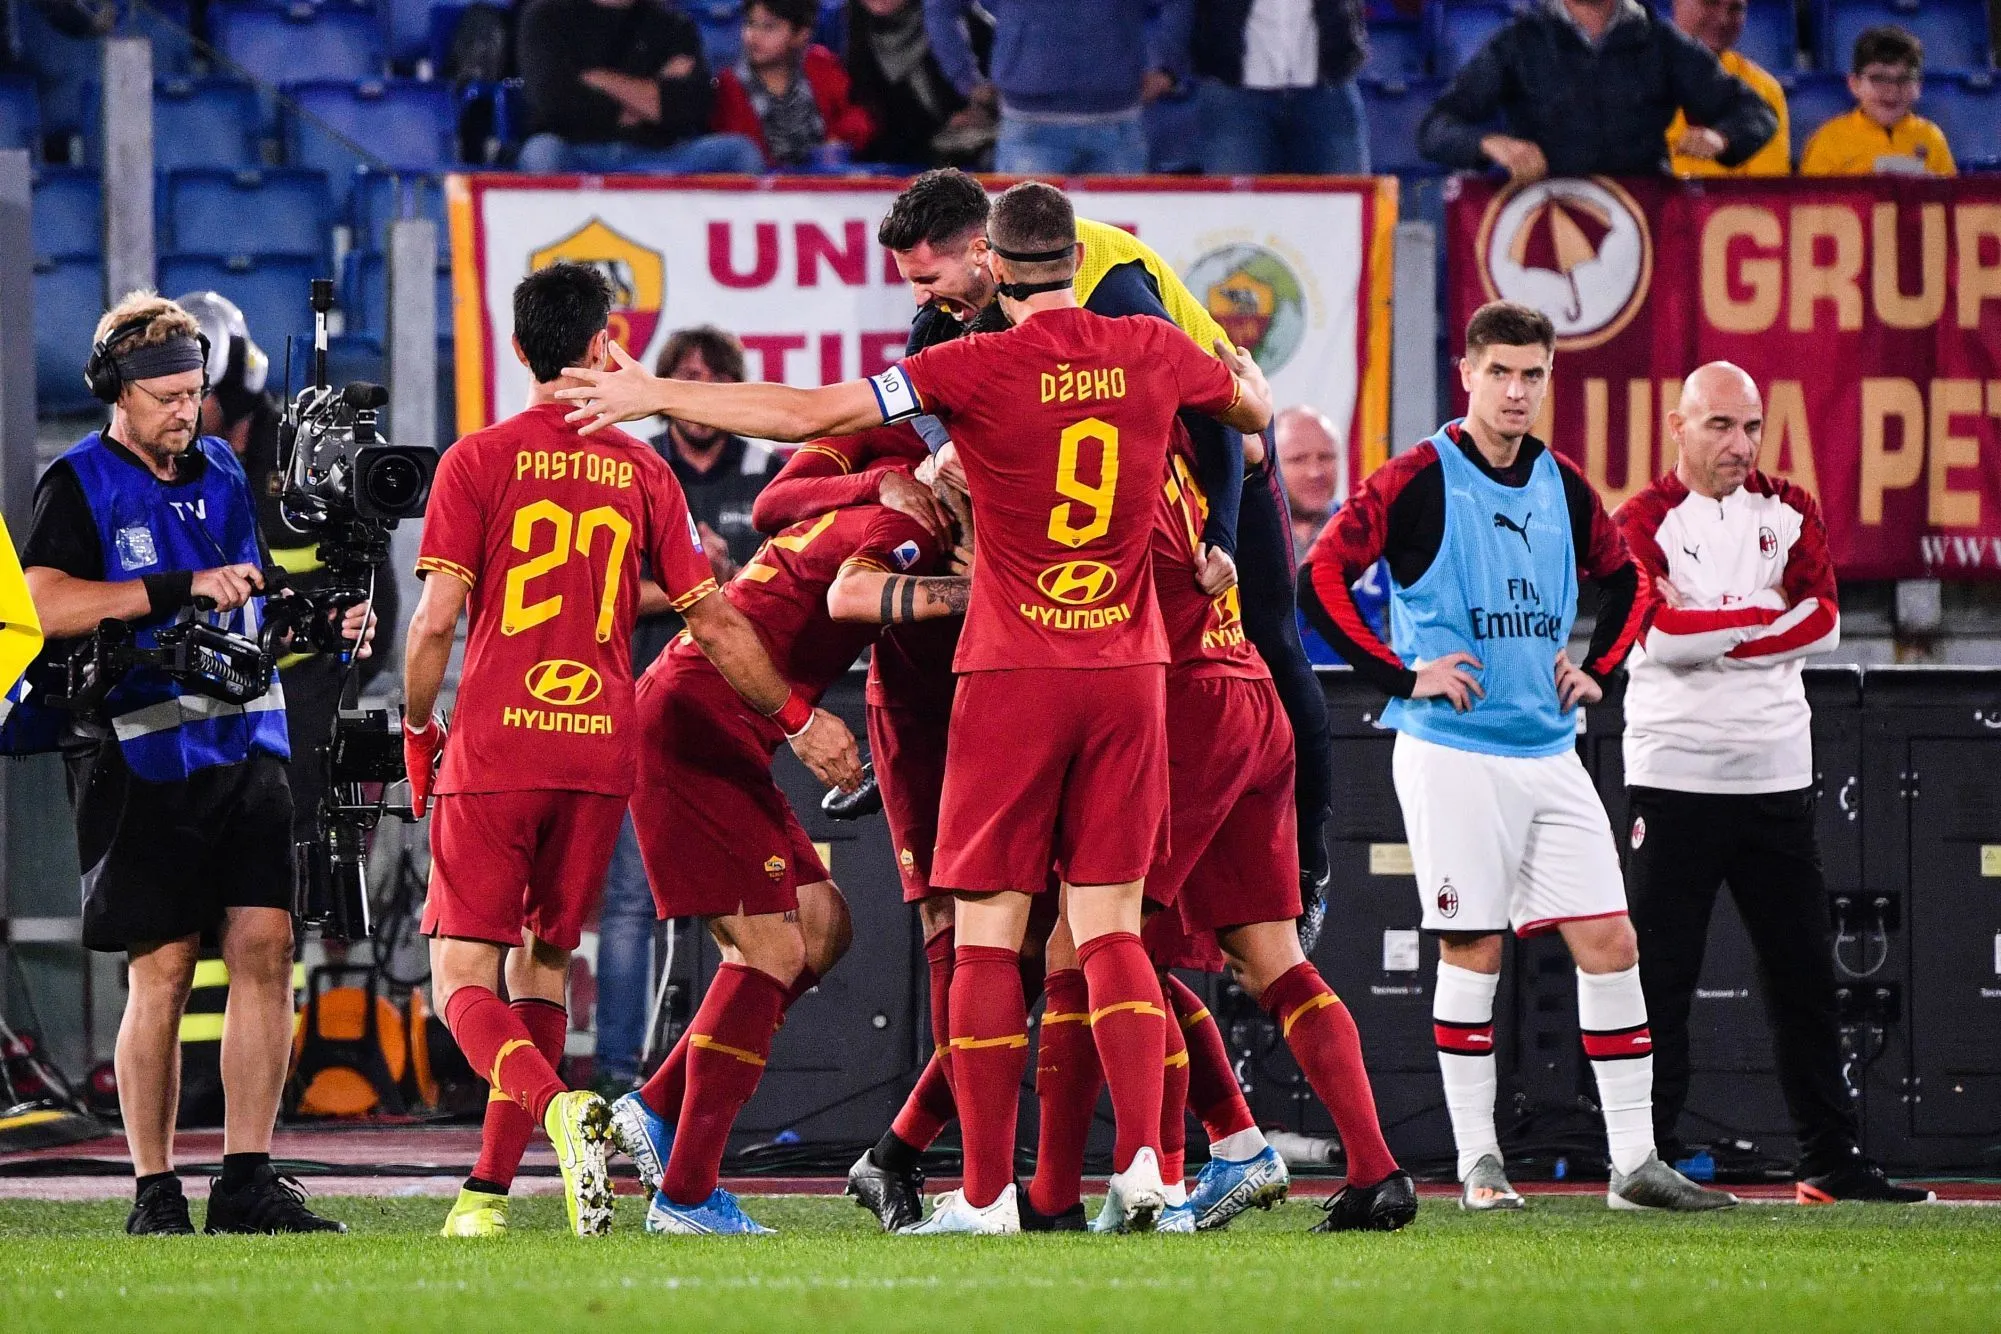 Pronostic AS Roma Udinese : Analyse, prono et cotes du match de Serie A